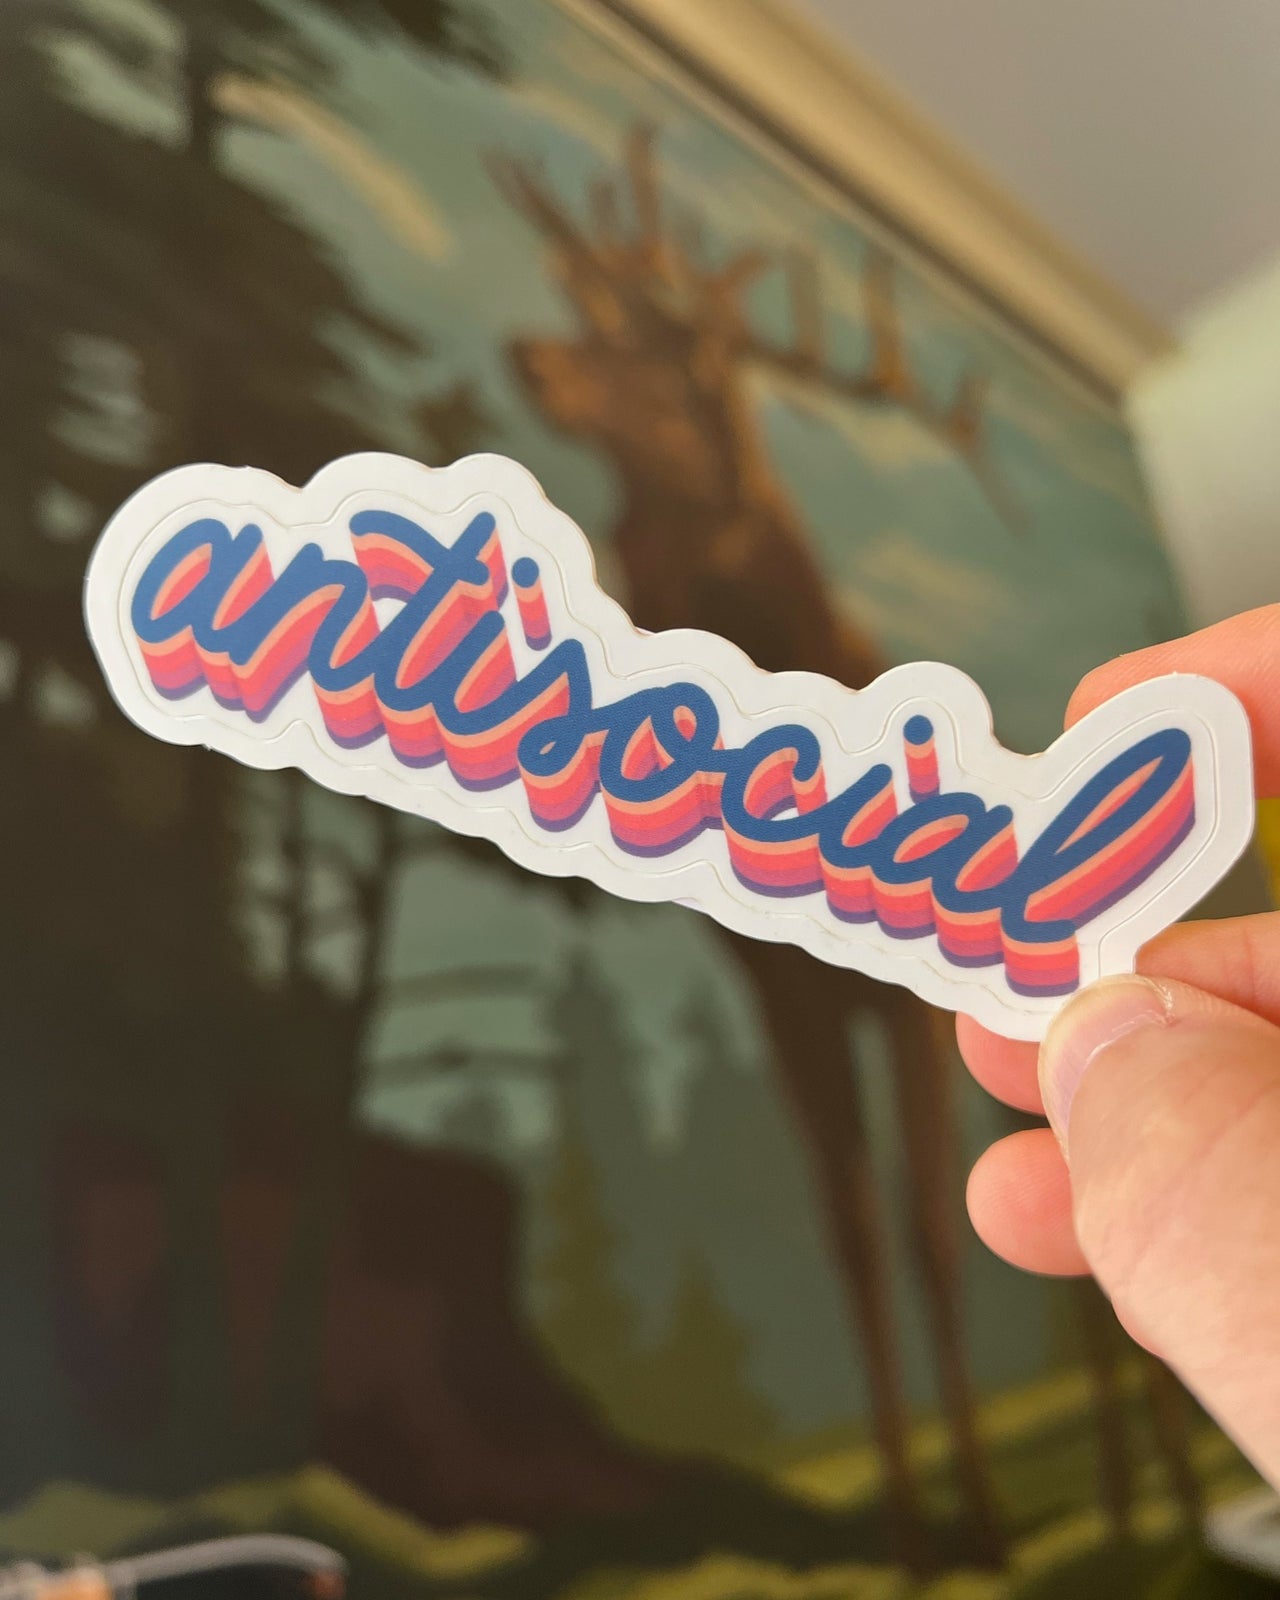 Antisocial Sticker